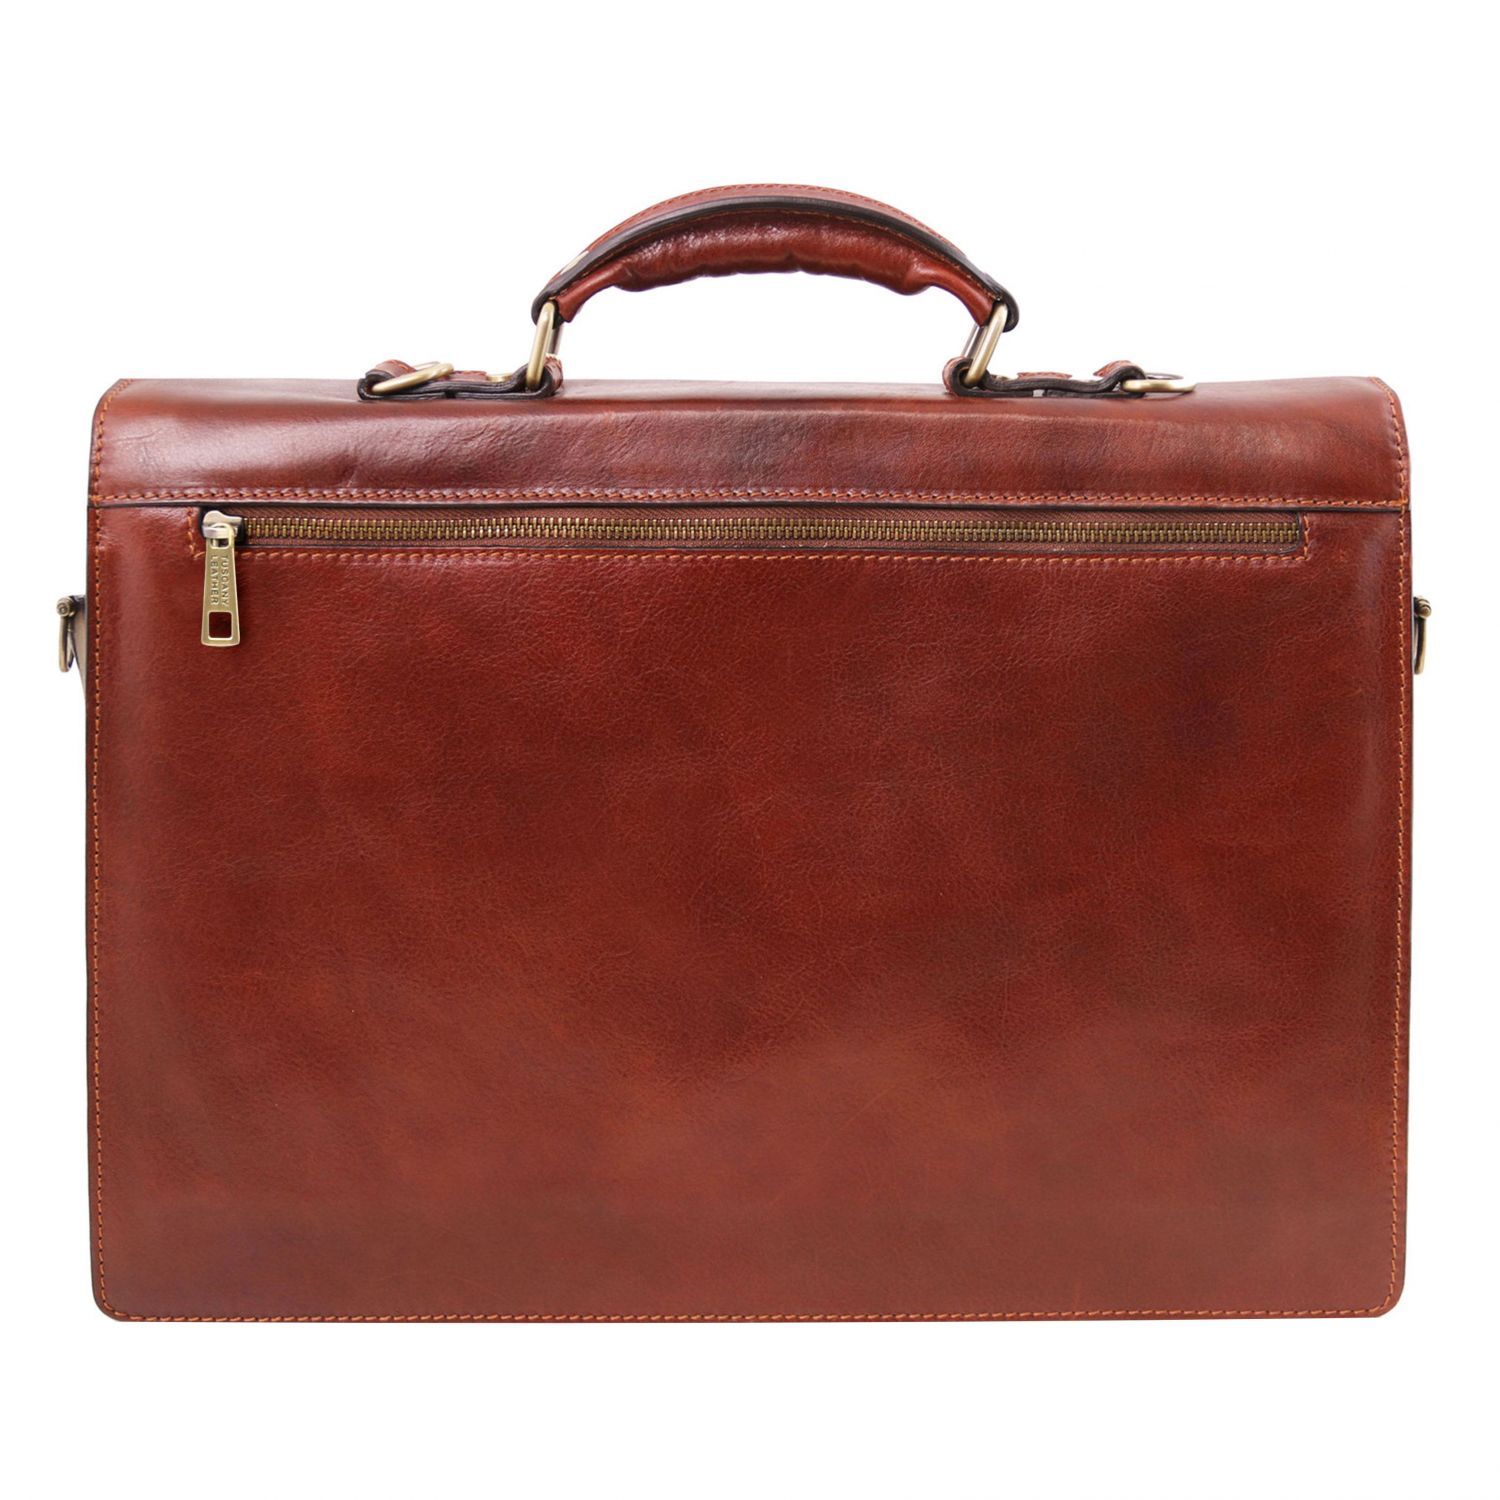 Volterra Leather Briefcase 2 Compartments Dark Brown TL141544